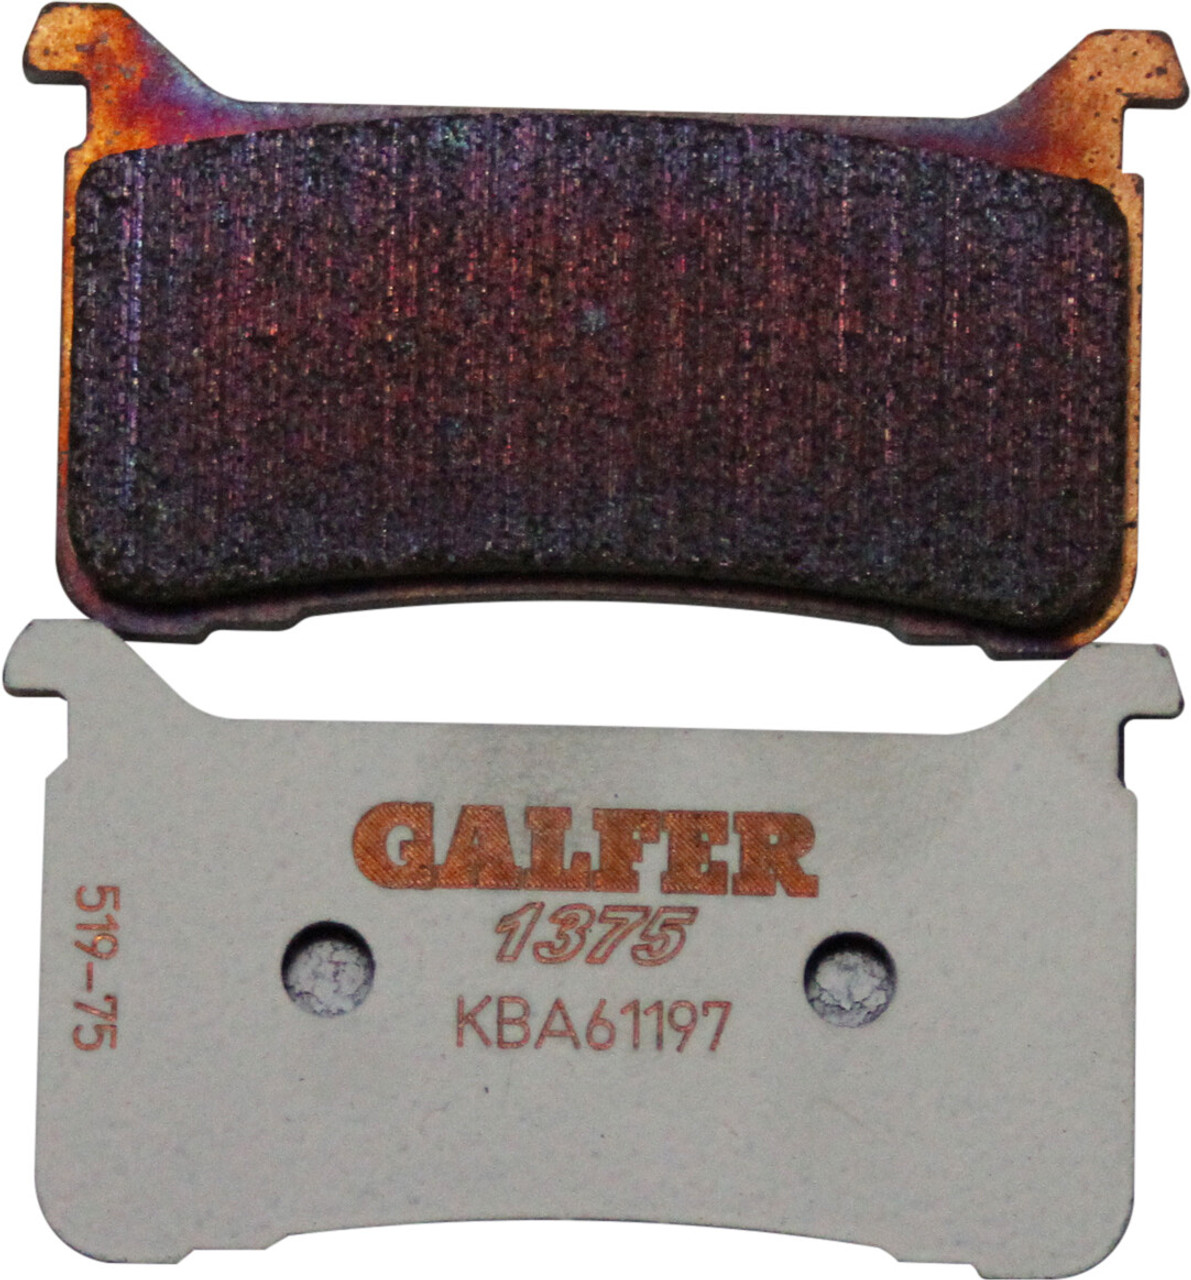 Galfer New HH Sintered Brake Pads, 17-519C